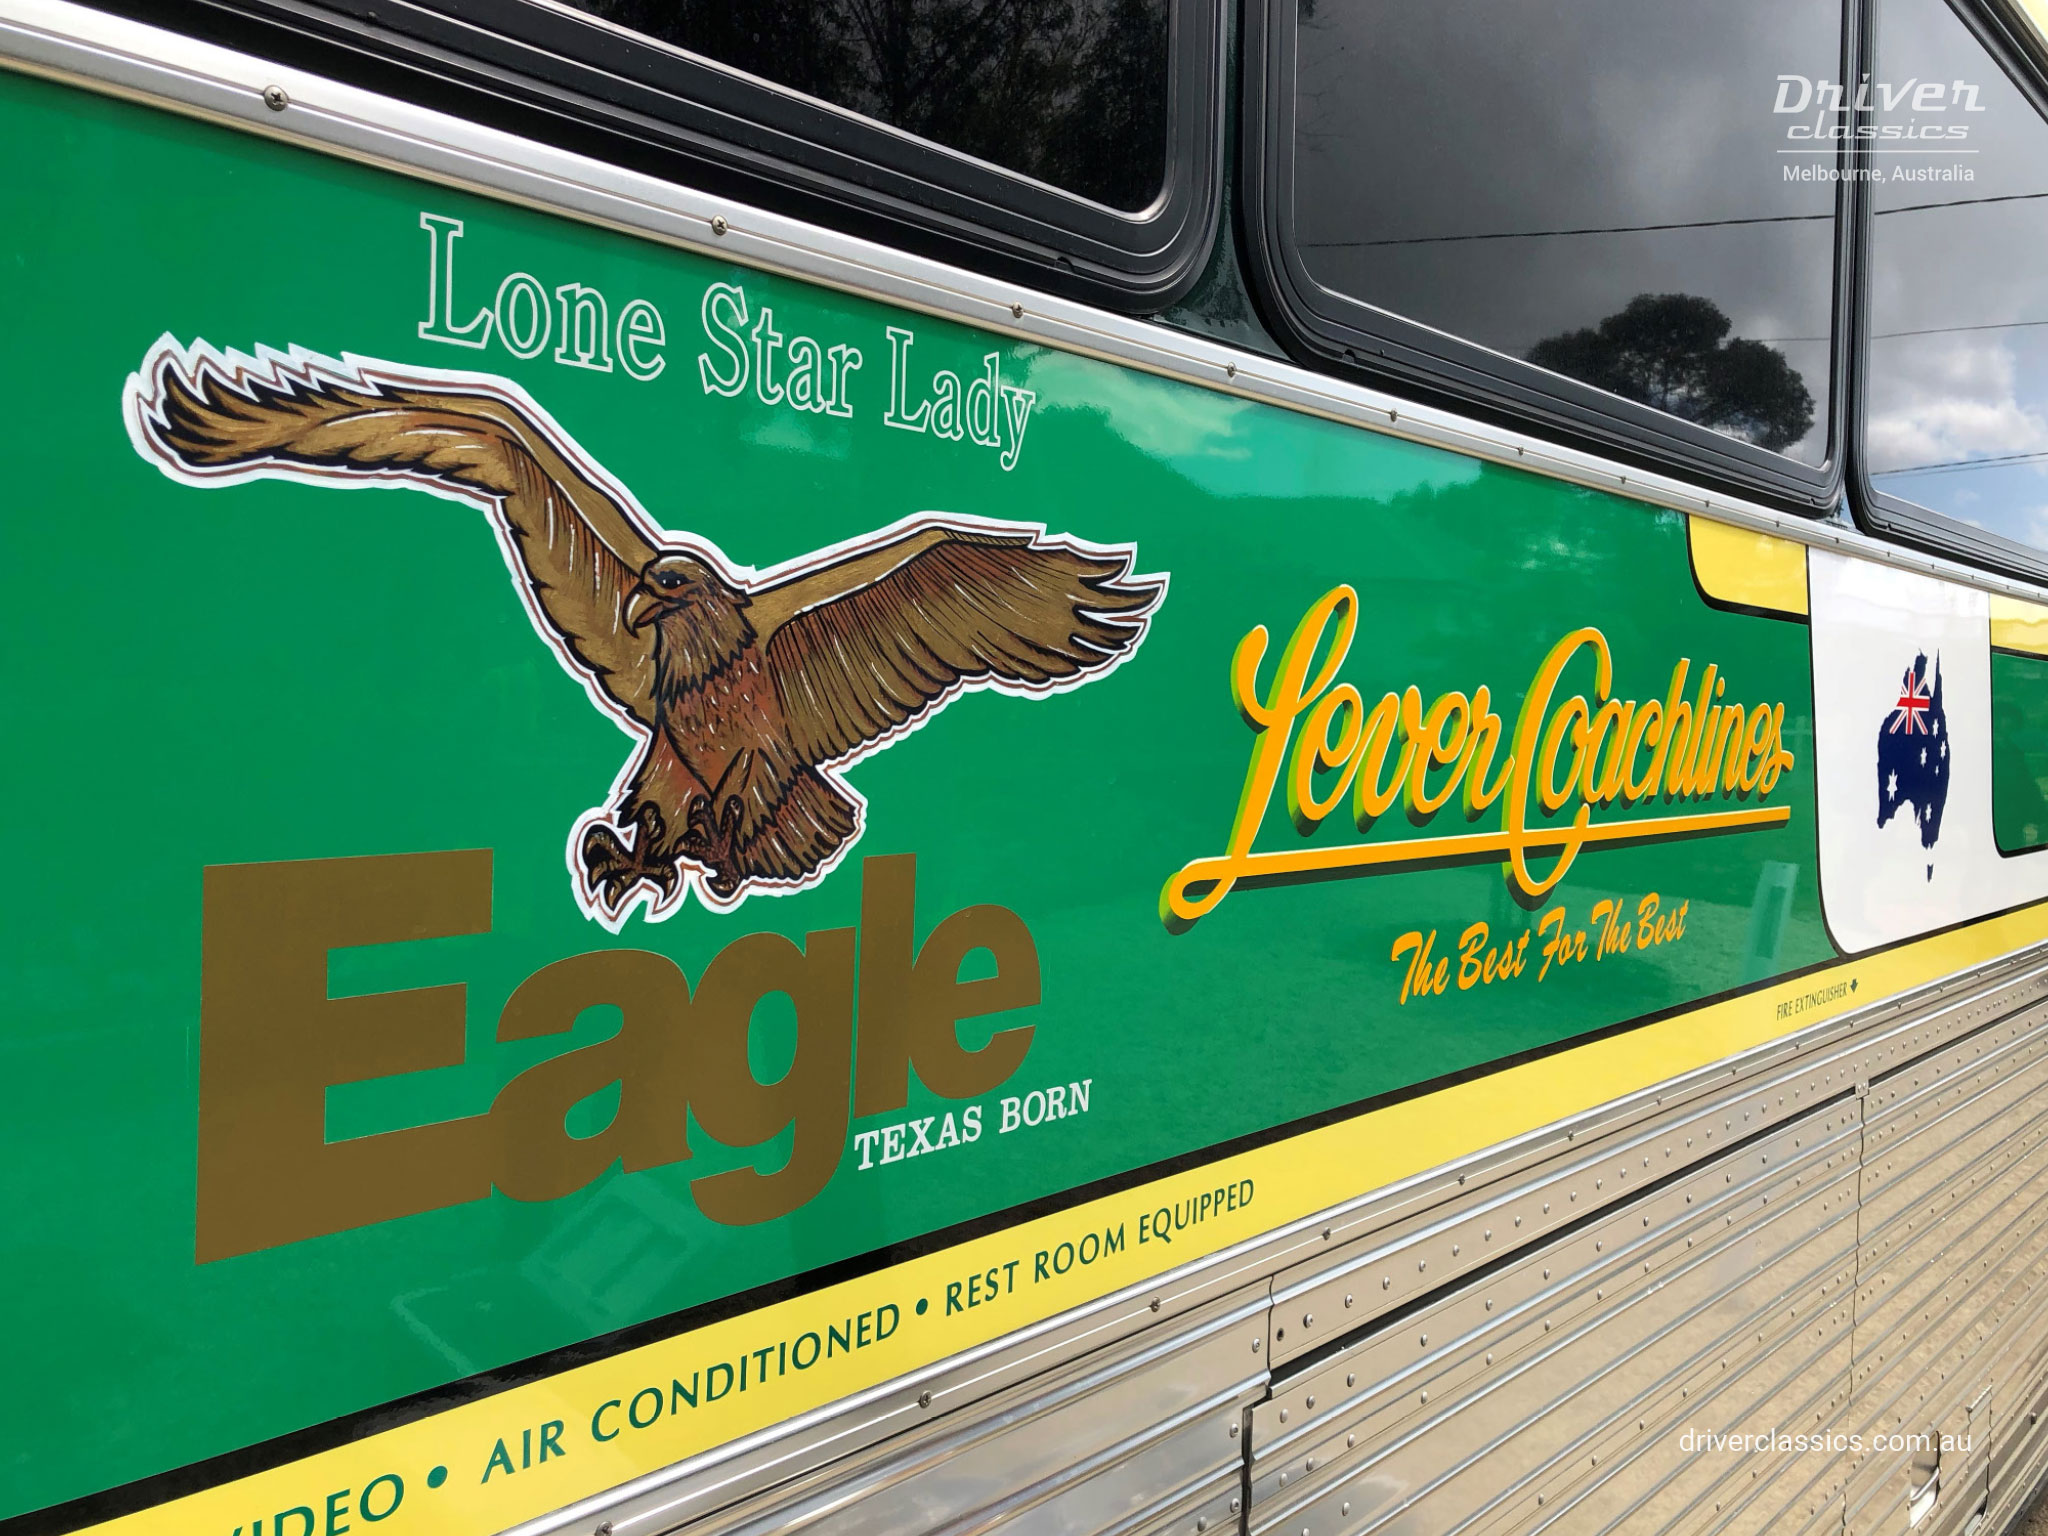 Distinctive ‘Lever’ style signwriting on 1989 Eagle Model 20 bus. Photo taken October 2019